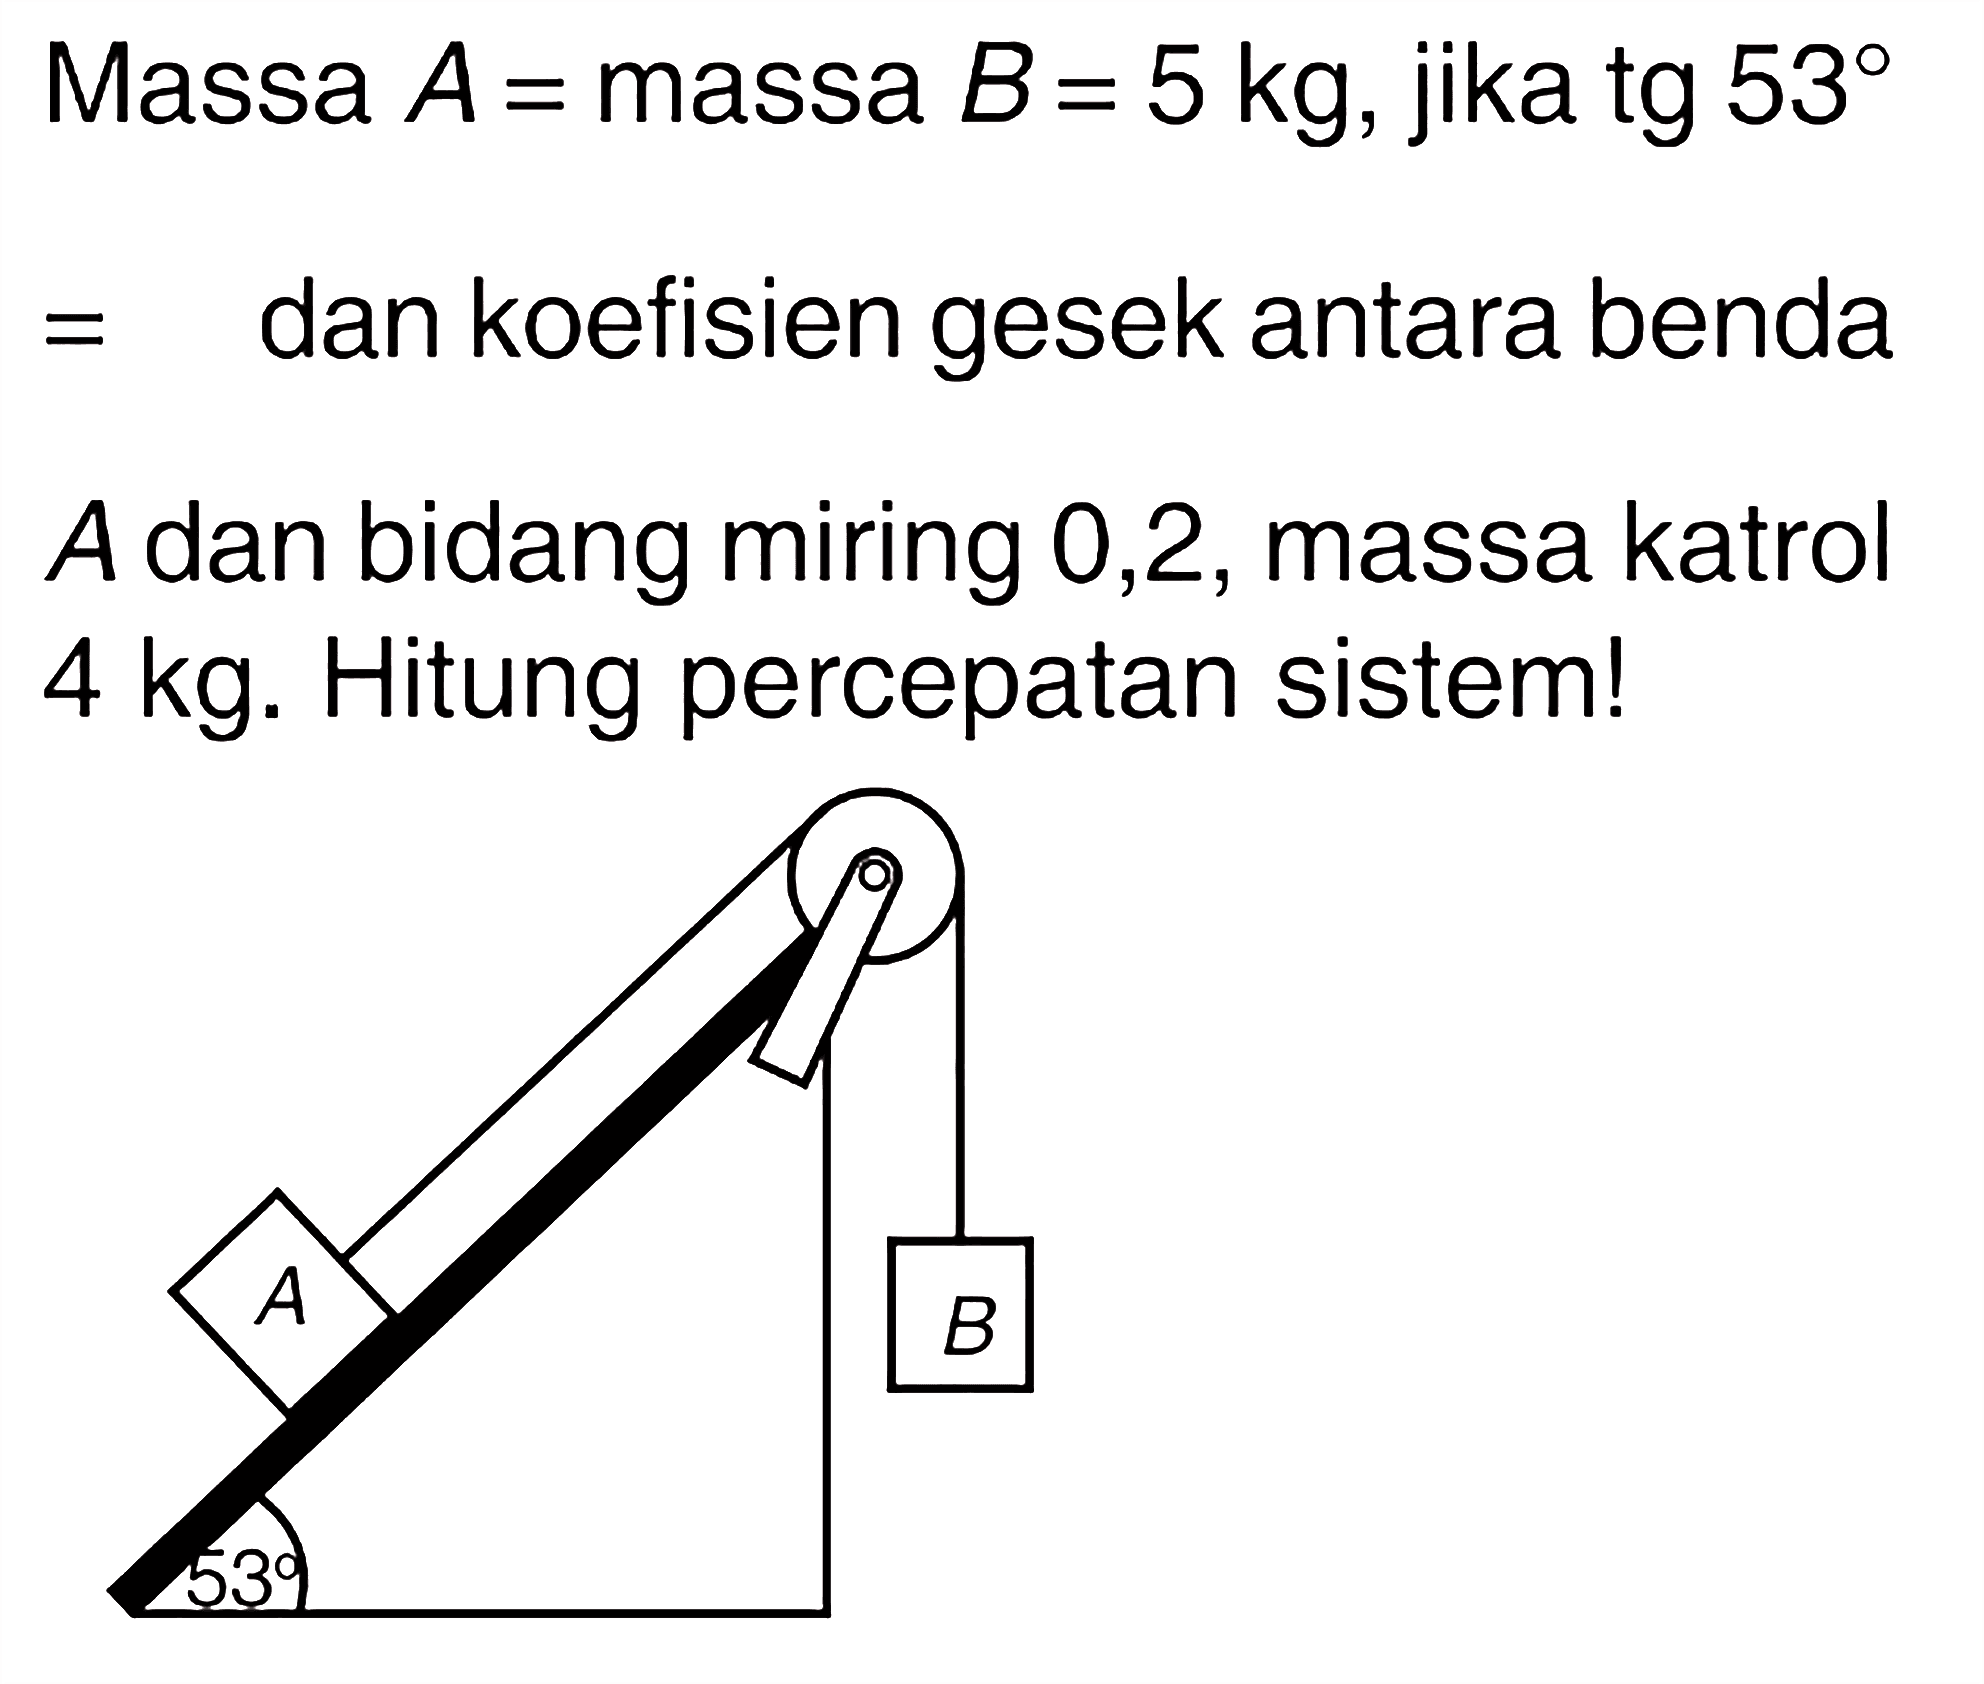 Massa A= massa B=5 kg, jika tg 53 = dan koefisien gesek antara benda  A dan bidang miring 0,2, massa katrol 4 kg. Hitung percepatan sistem! A 53 B
 
